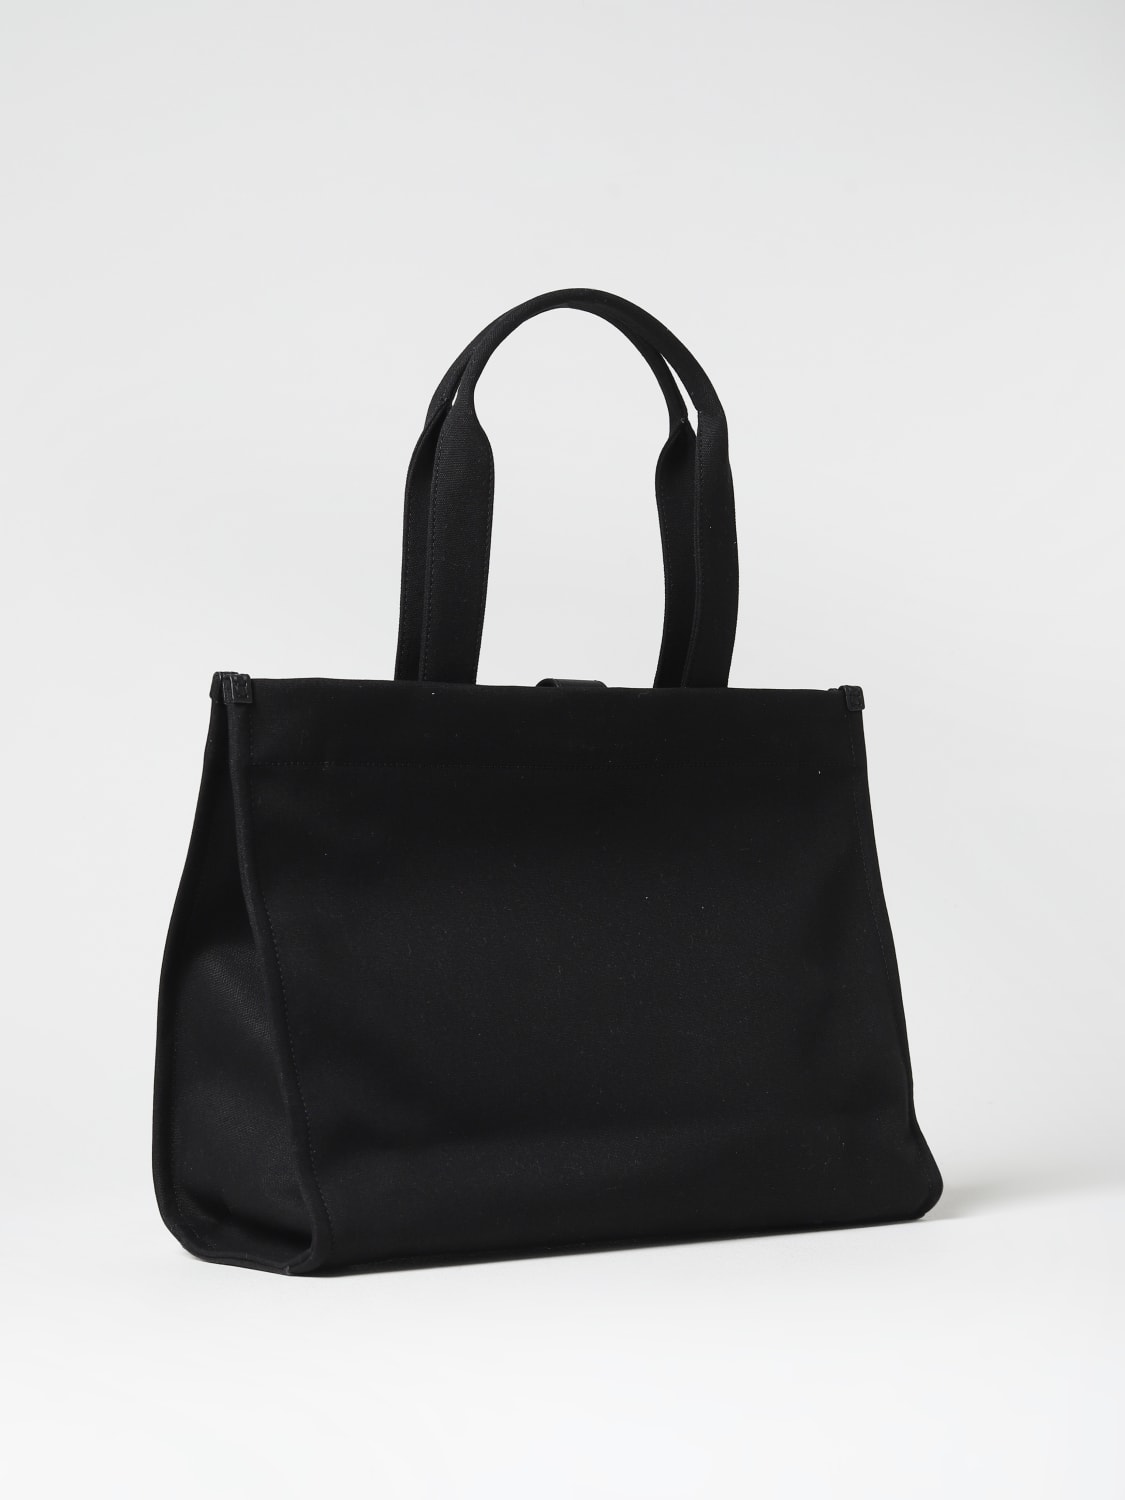 Small Tory Tote: Women's Handbags, Tote Bags